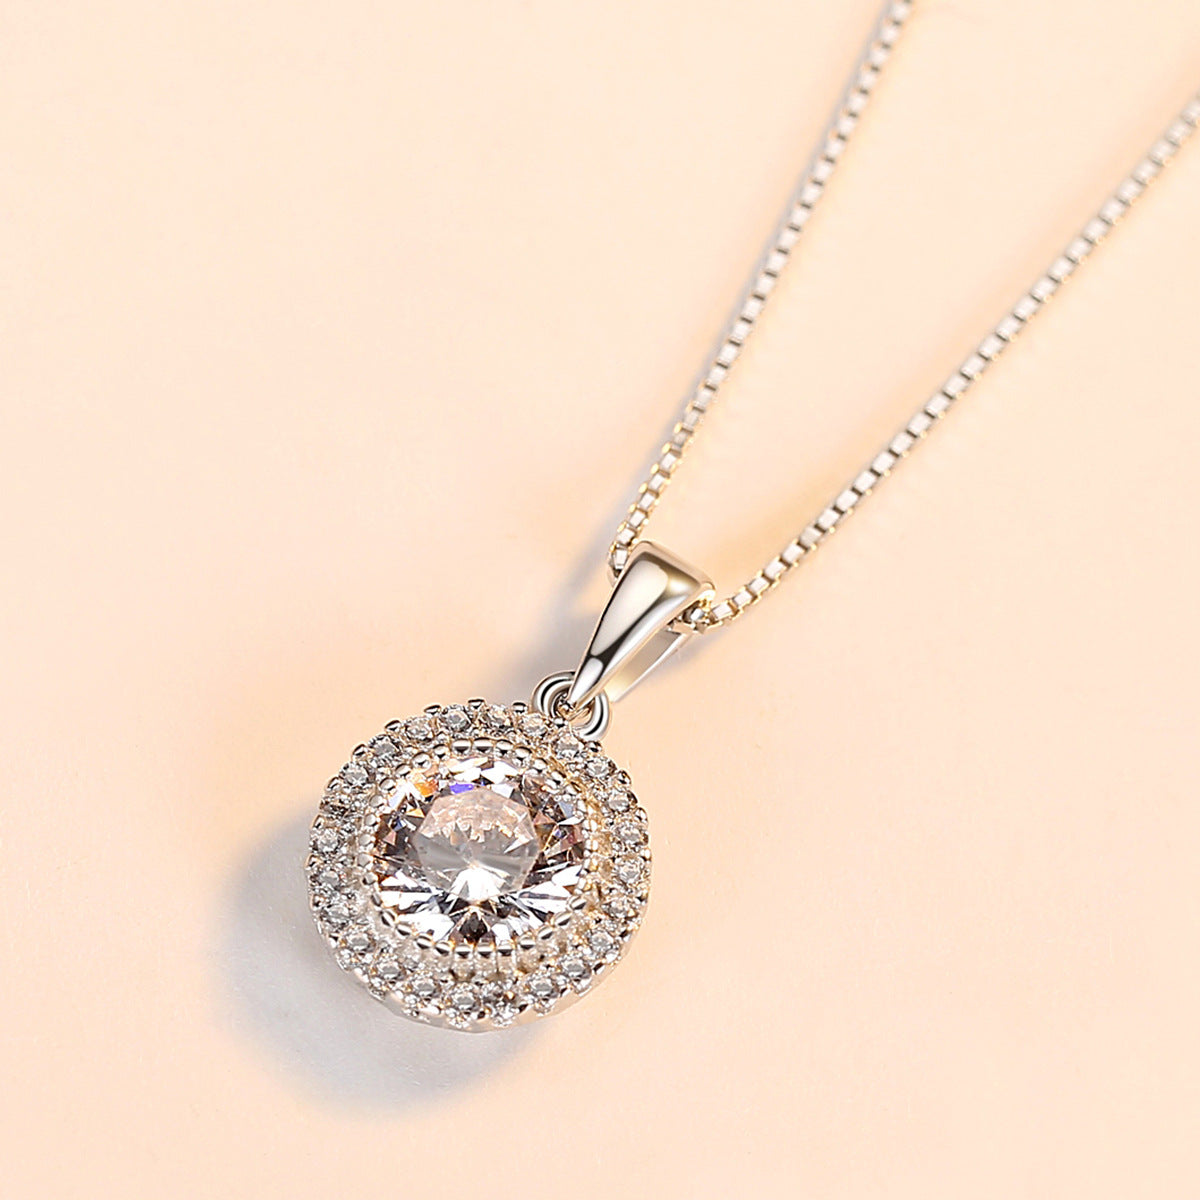 No. 26 - Delicate Round Pendant 925 Silver Necklace, Cute and Elegant, Fashion Jewelry